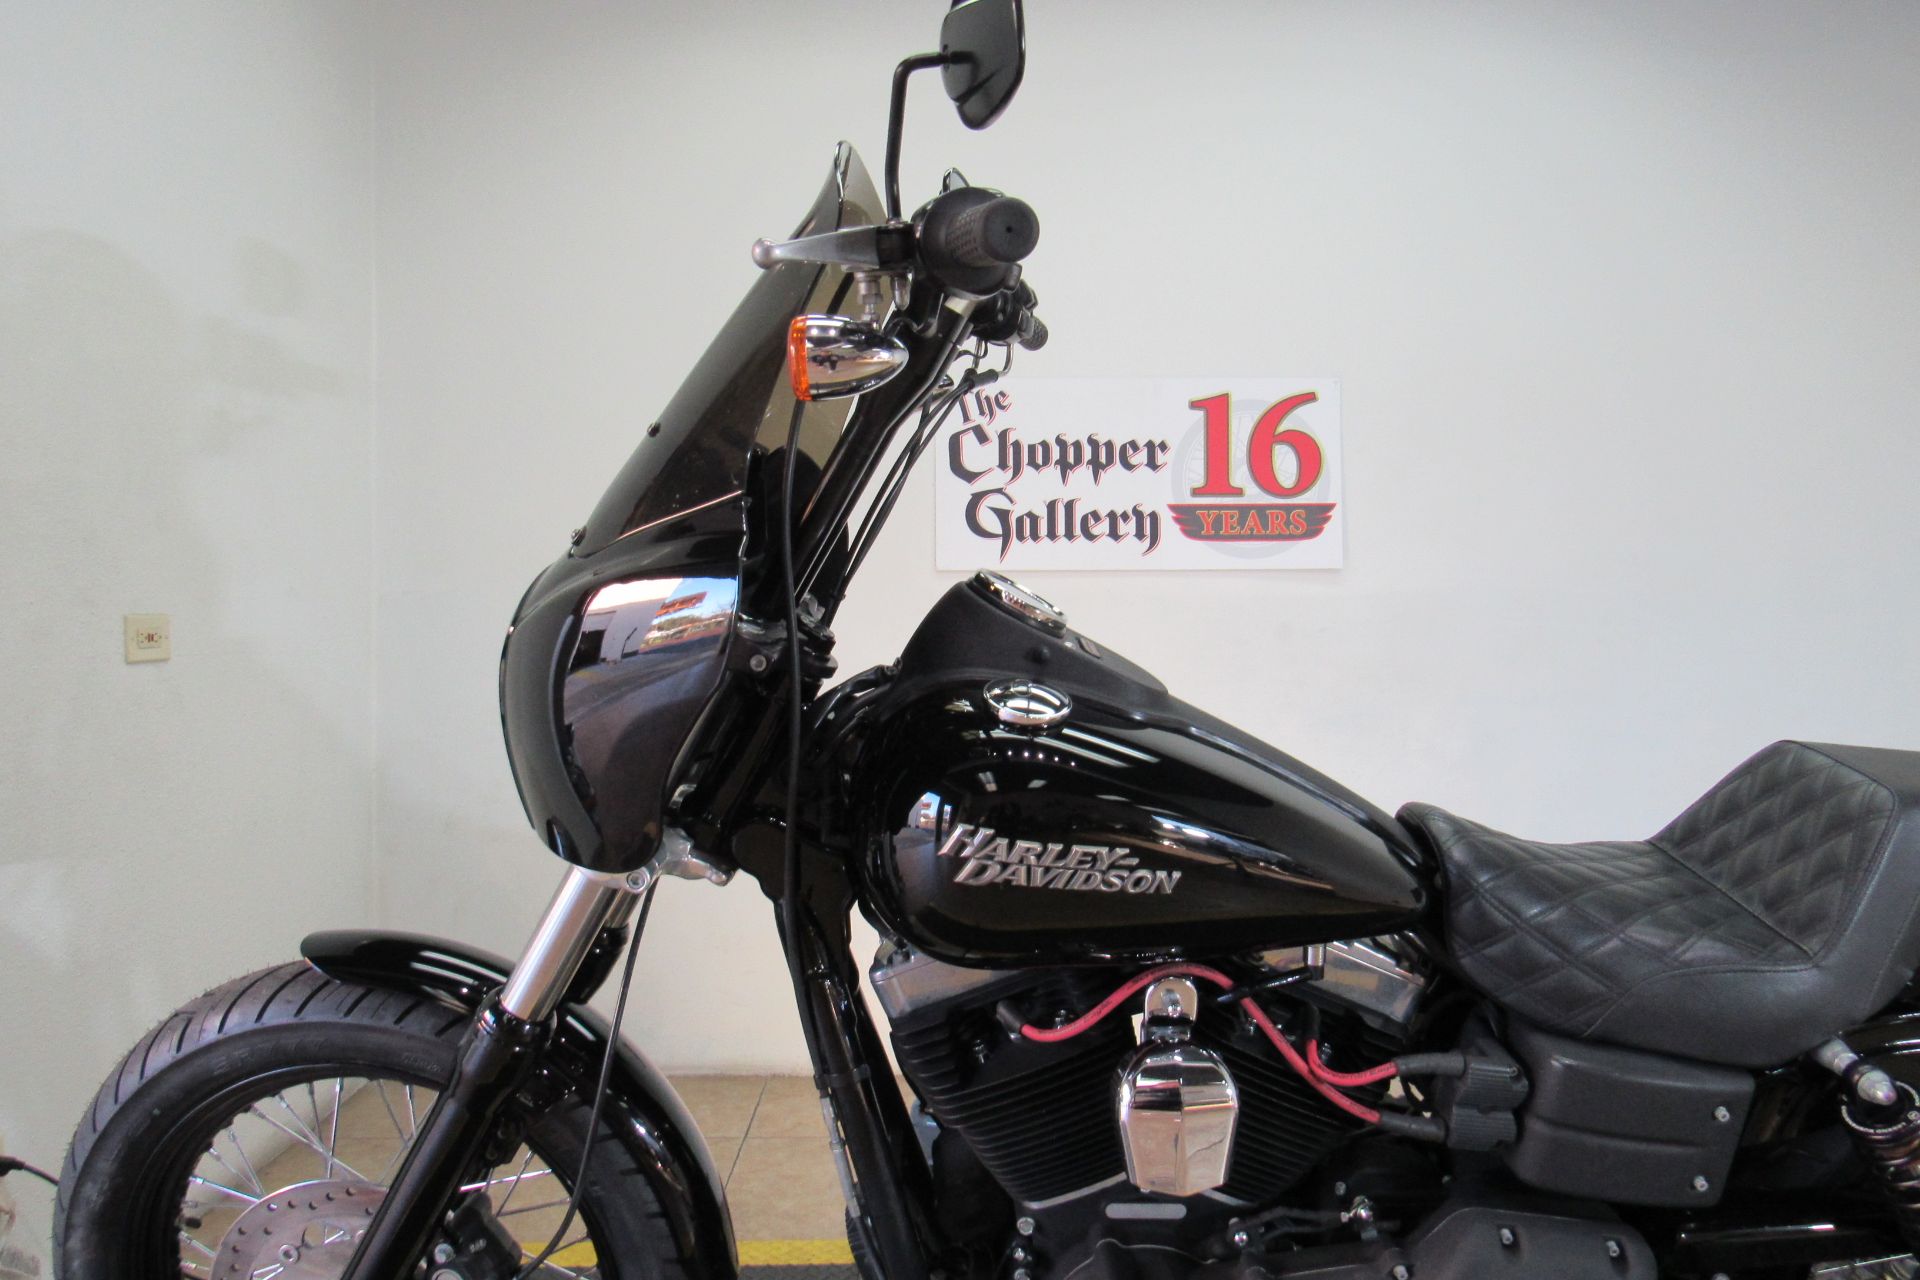 2011 Harley-Davidson Dyna® Street Bob® in Temecula, California - Photo 12